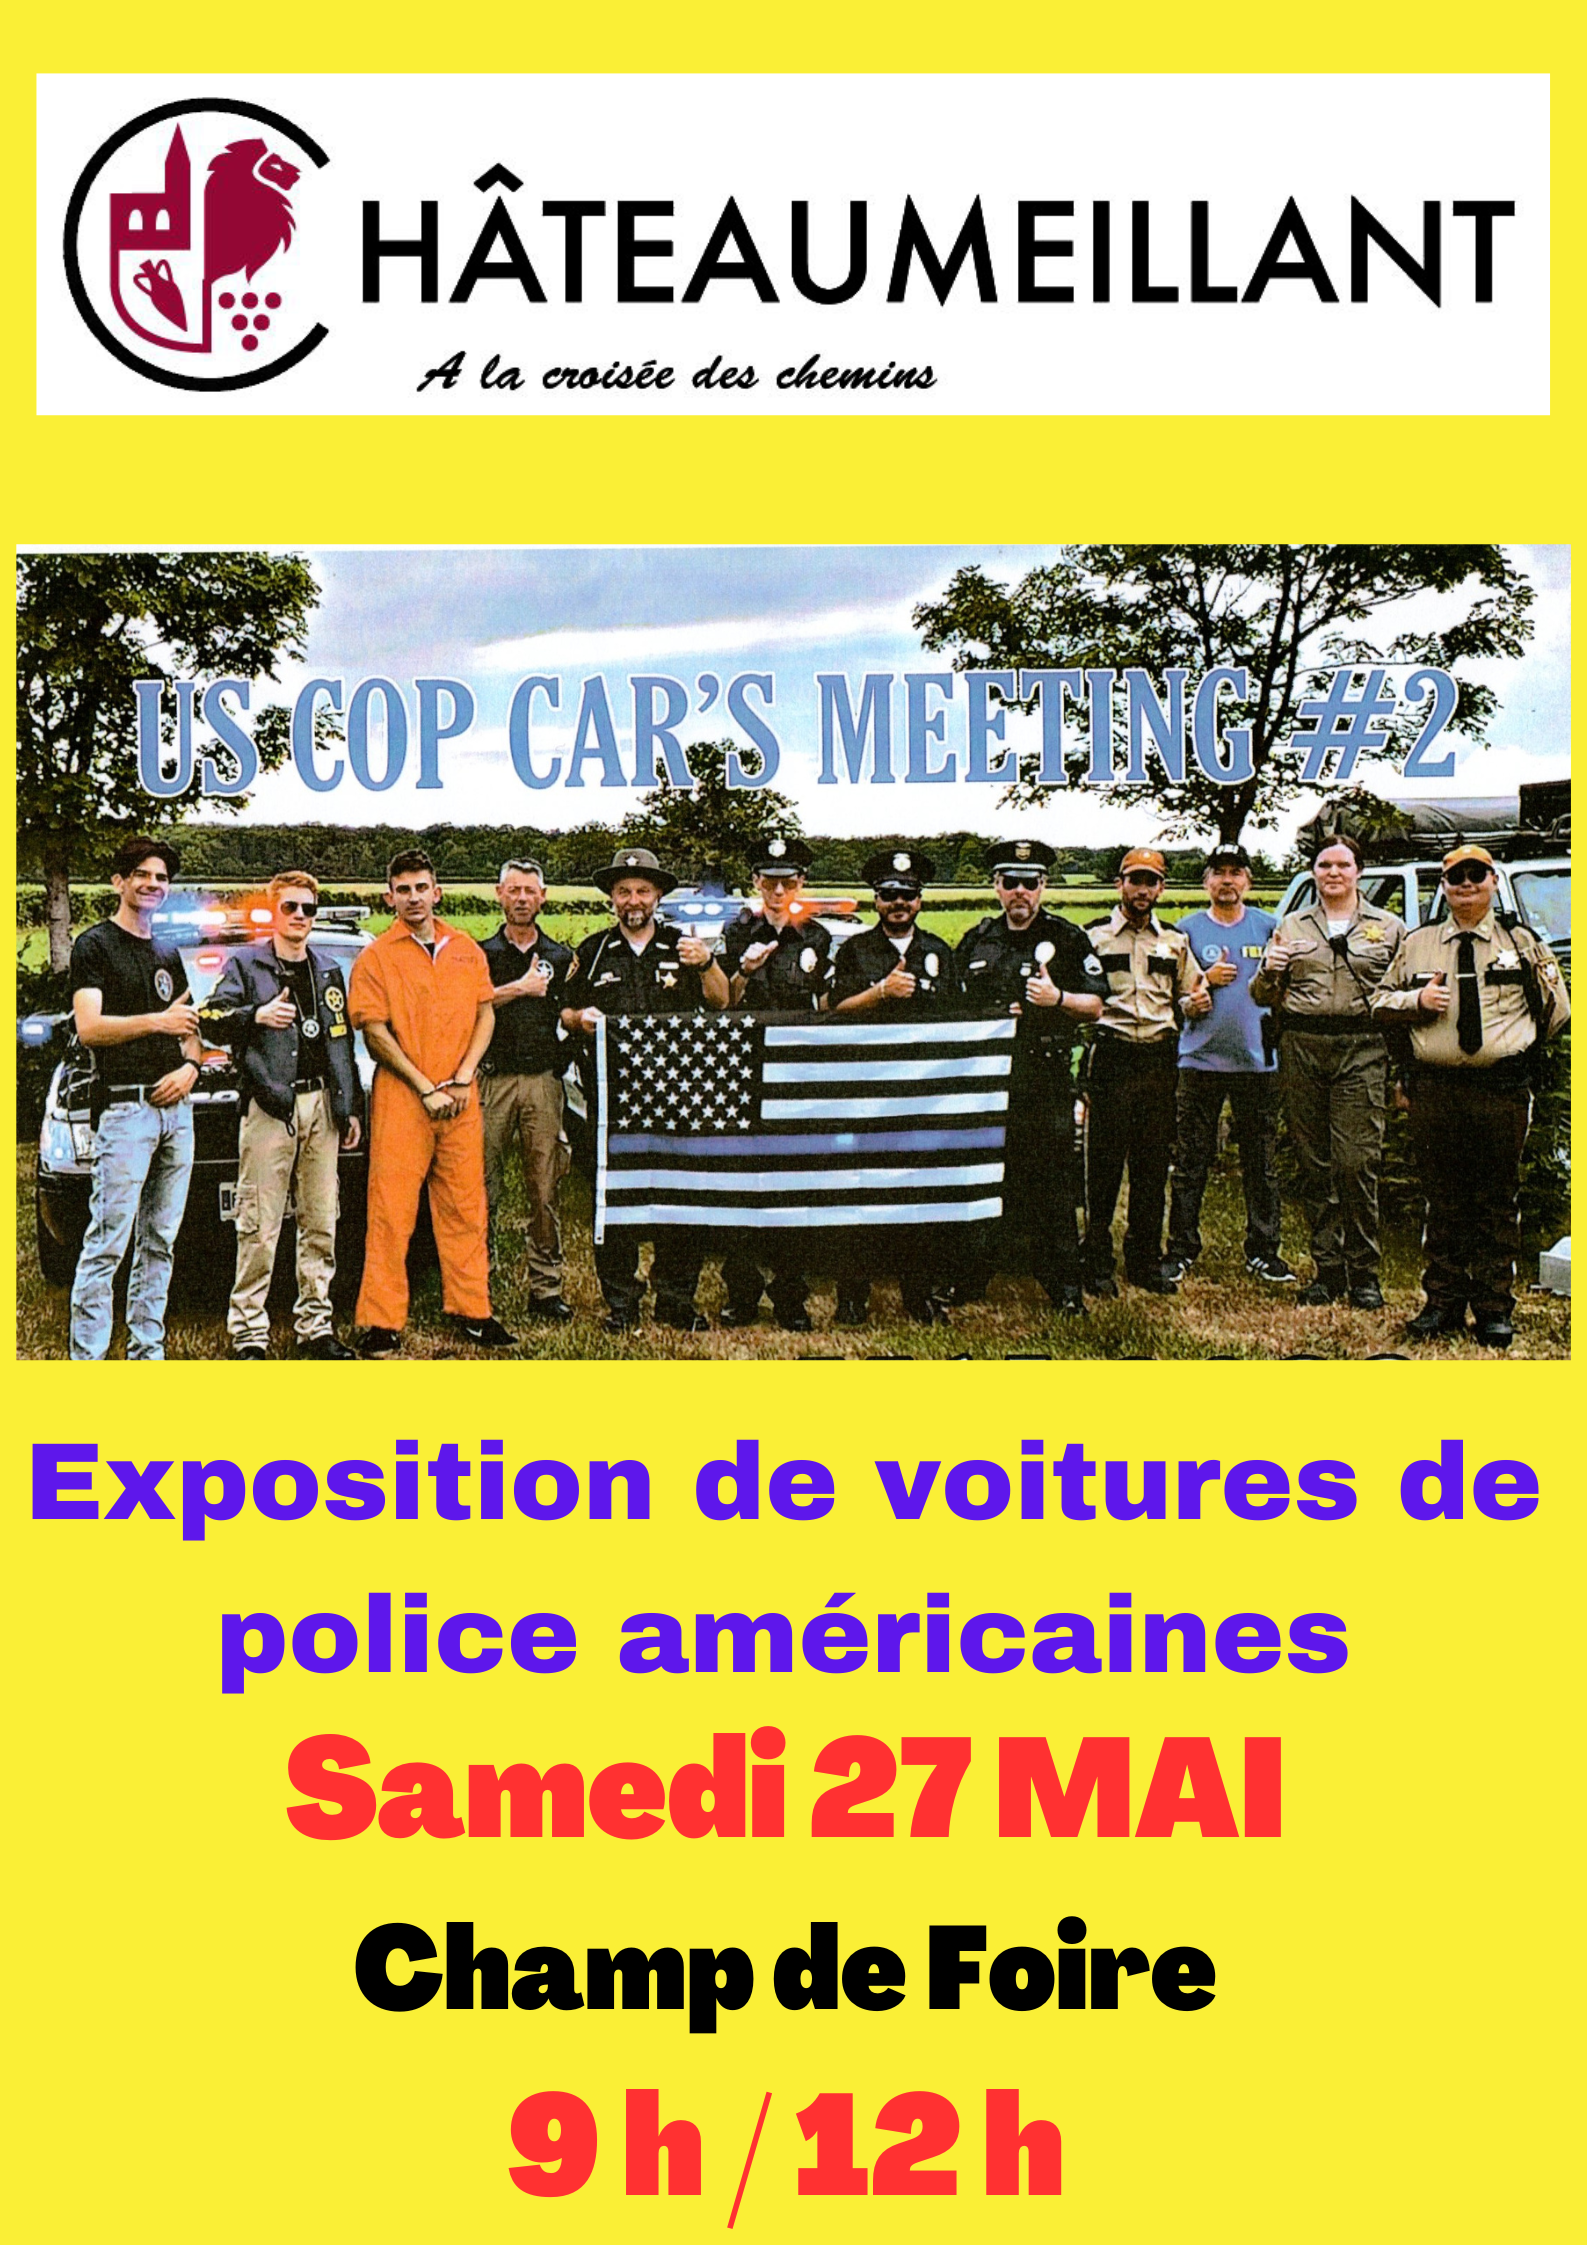 EXPOSITION DE VOITURES DE POLICE AMERICAINES LE SAMEDI 27 MAI